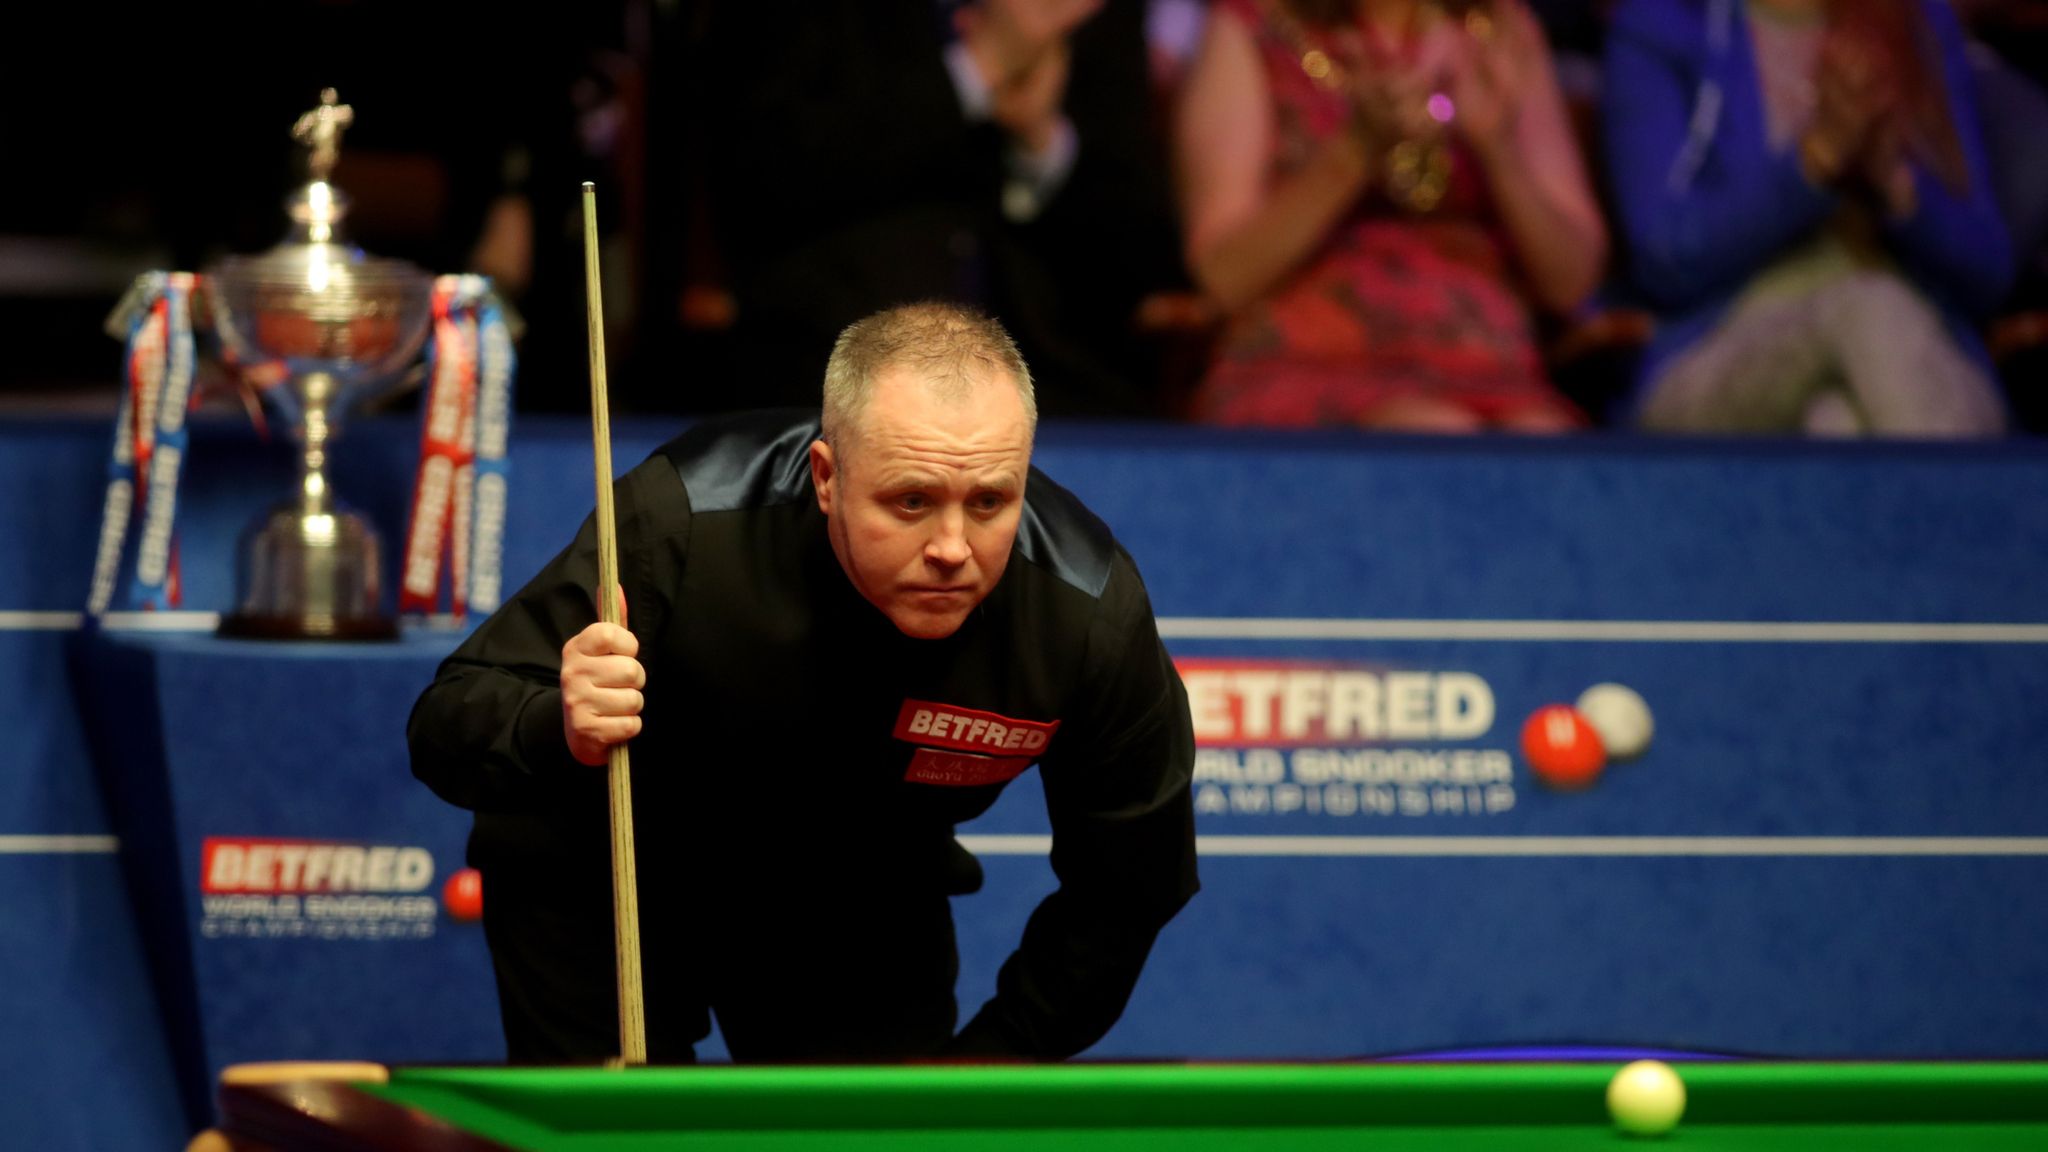 Mark Williams beats John Higgins in World Snooker Championship final Snooker News Sky Sports